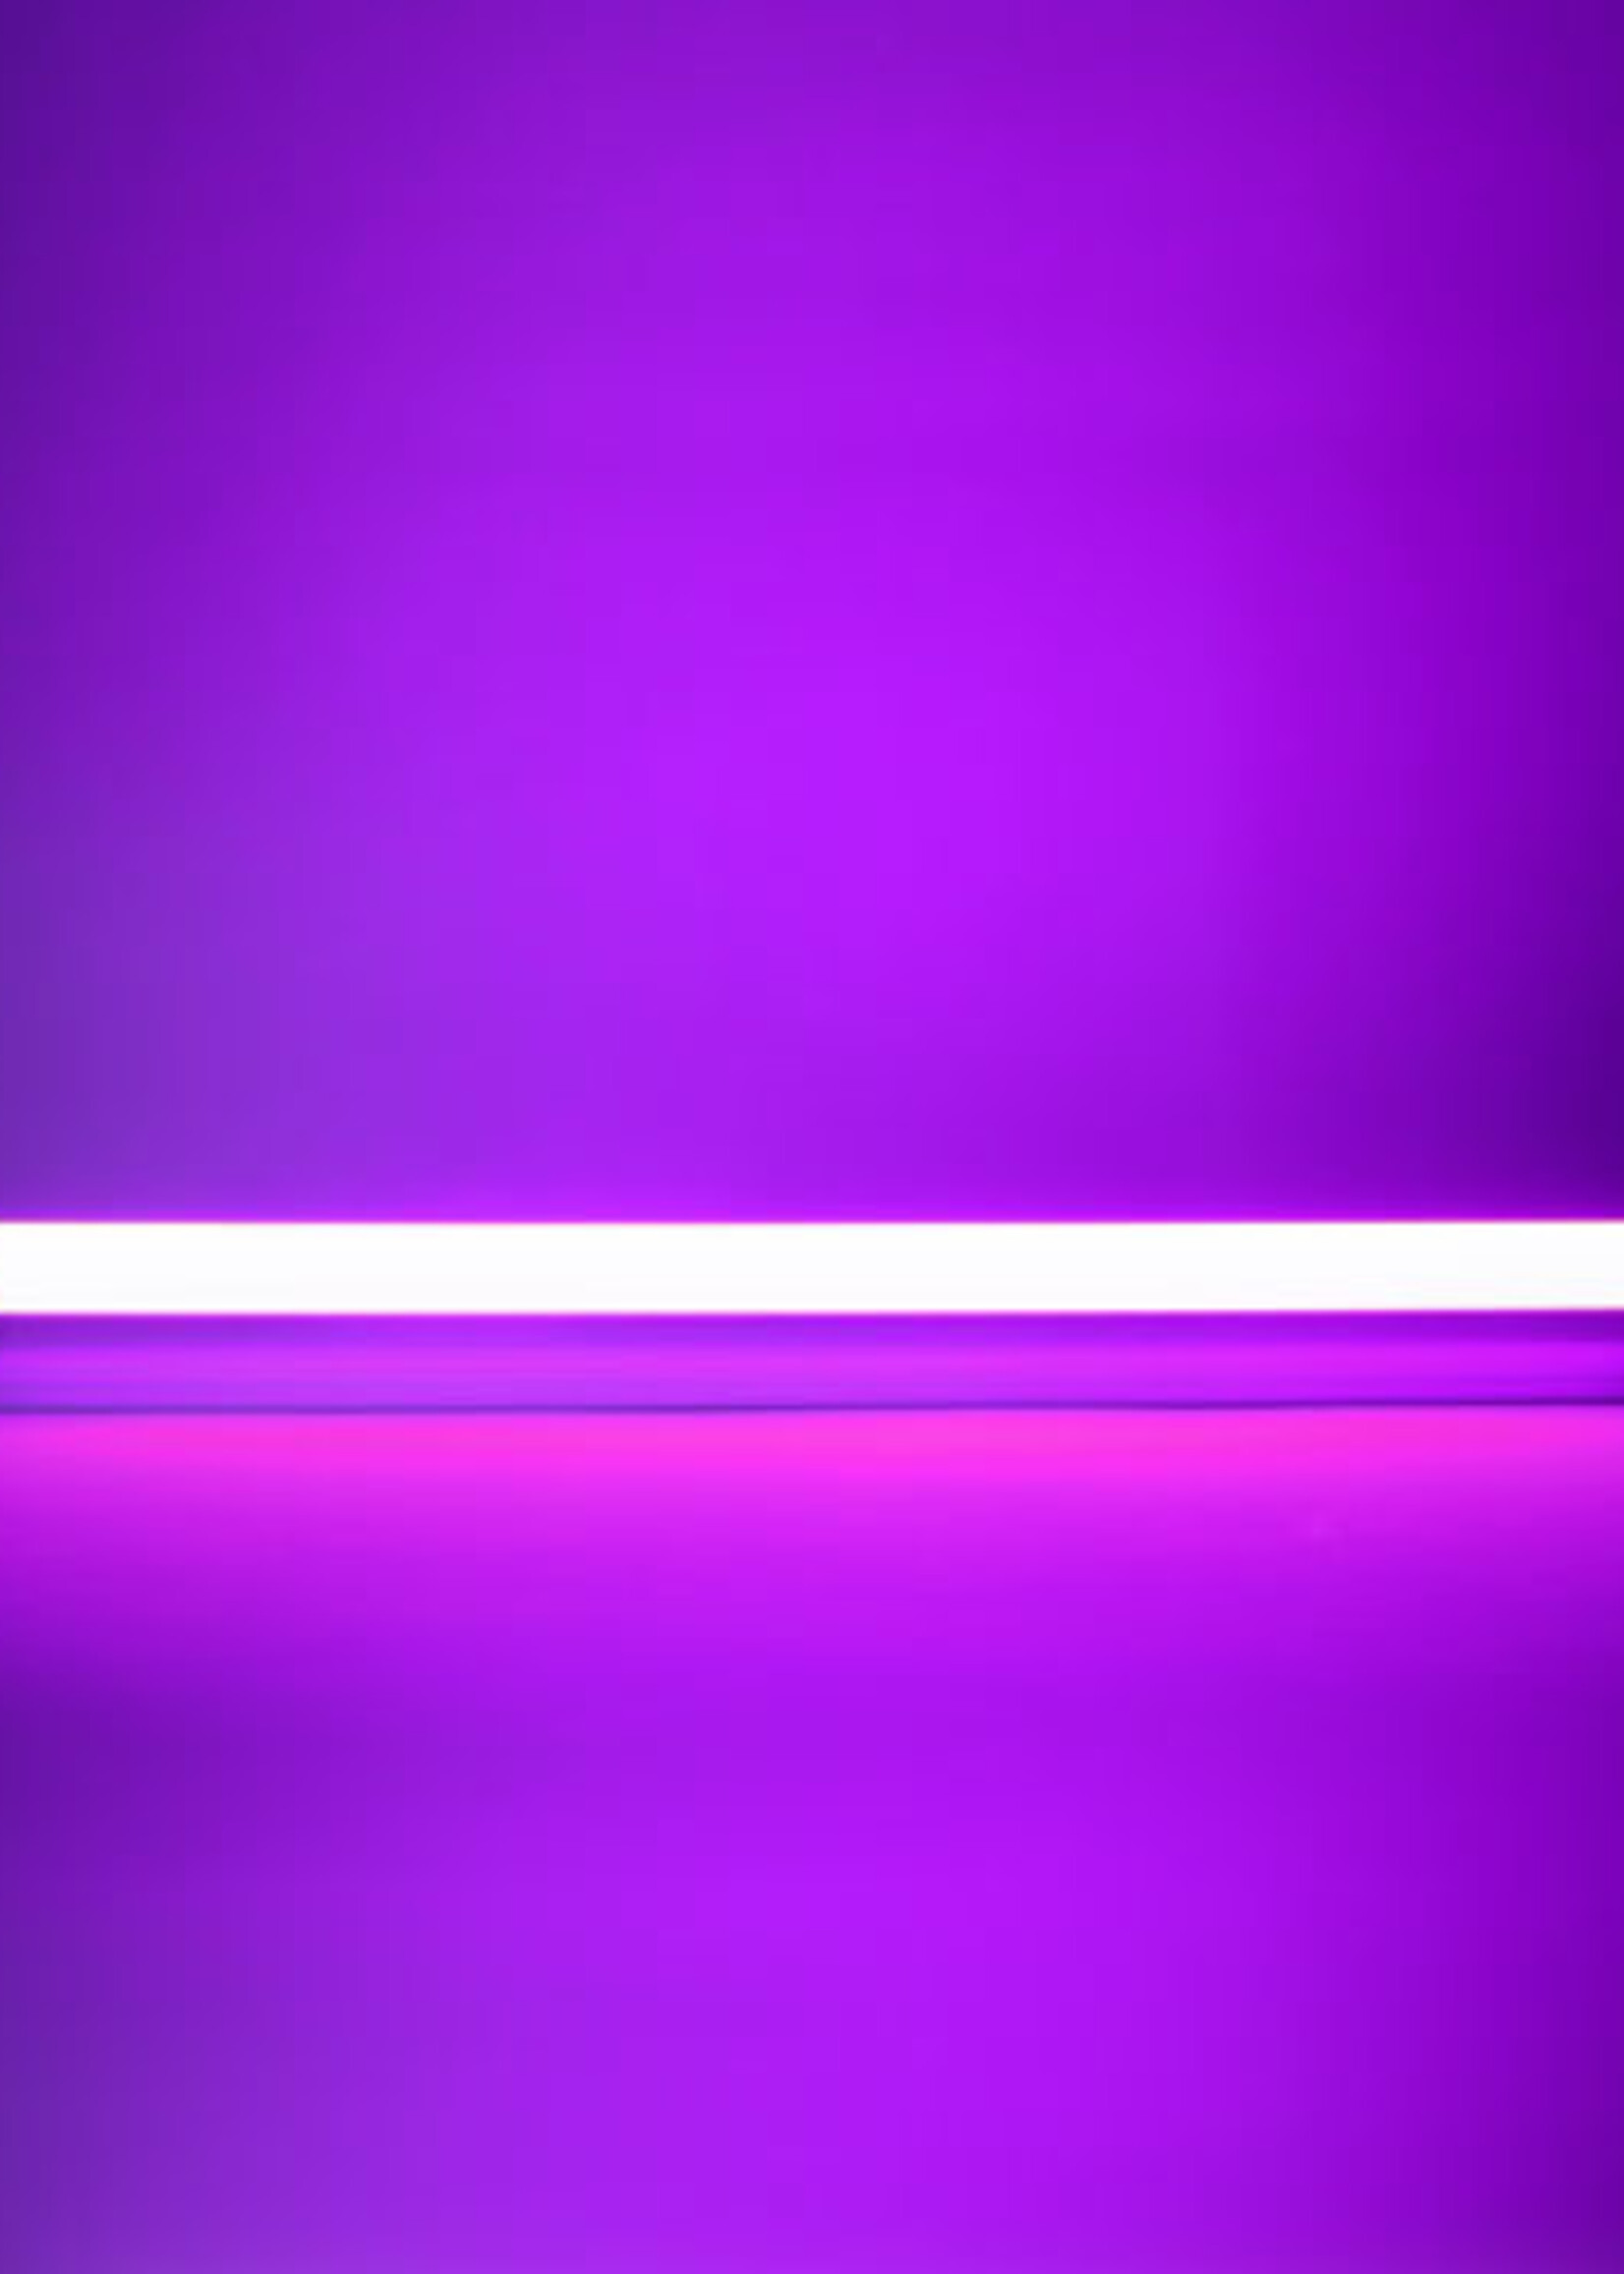 LEDWINKEL-Online Smart WiFi LED Tube Light 60cm RGB Colored Light 9W